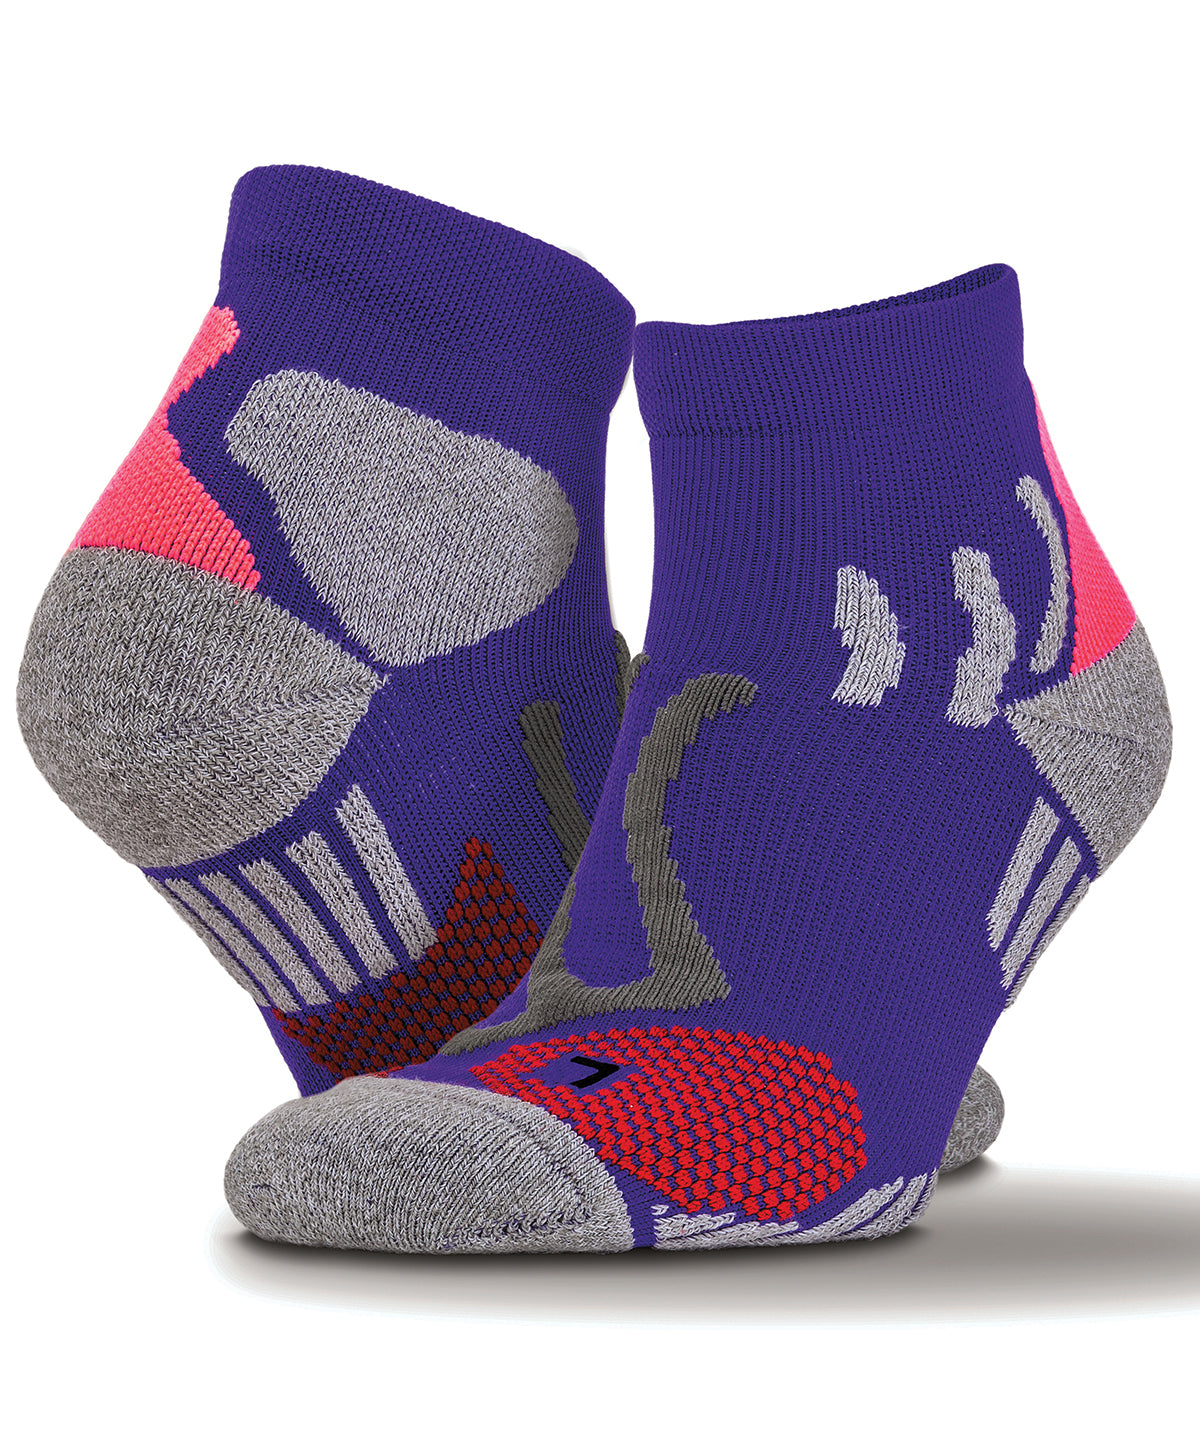 Sokkar - Technical Compression Sports Socks